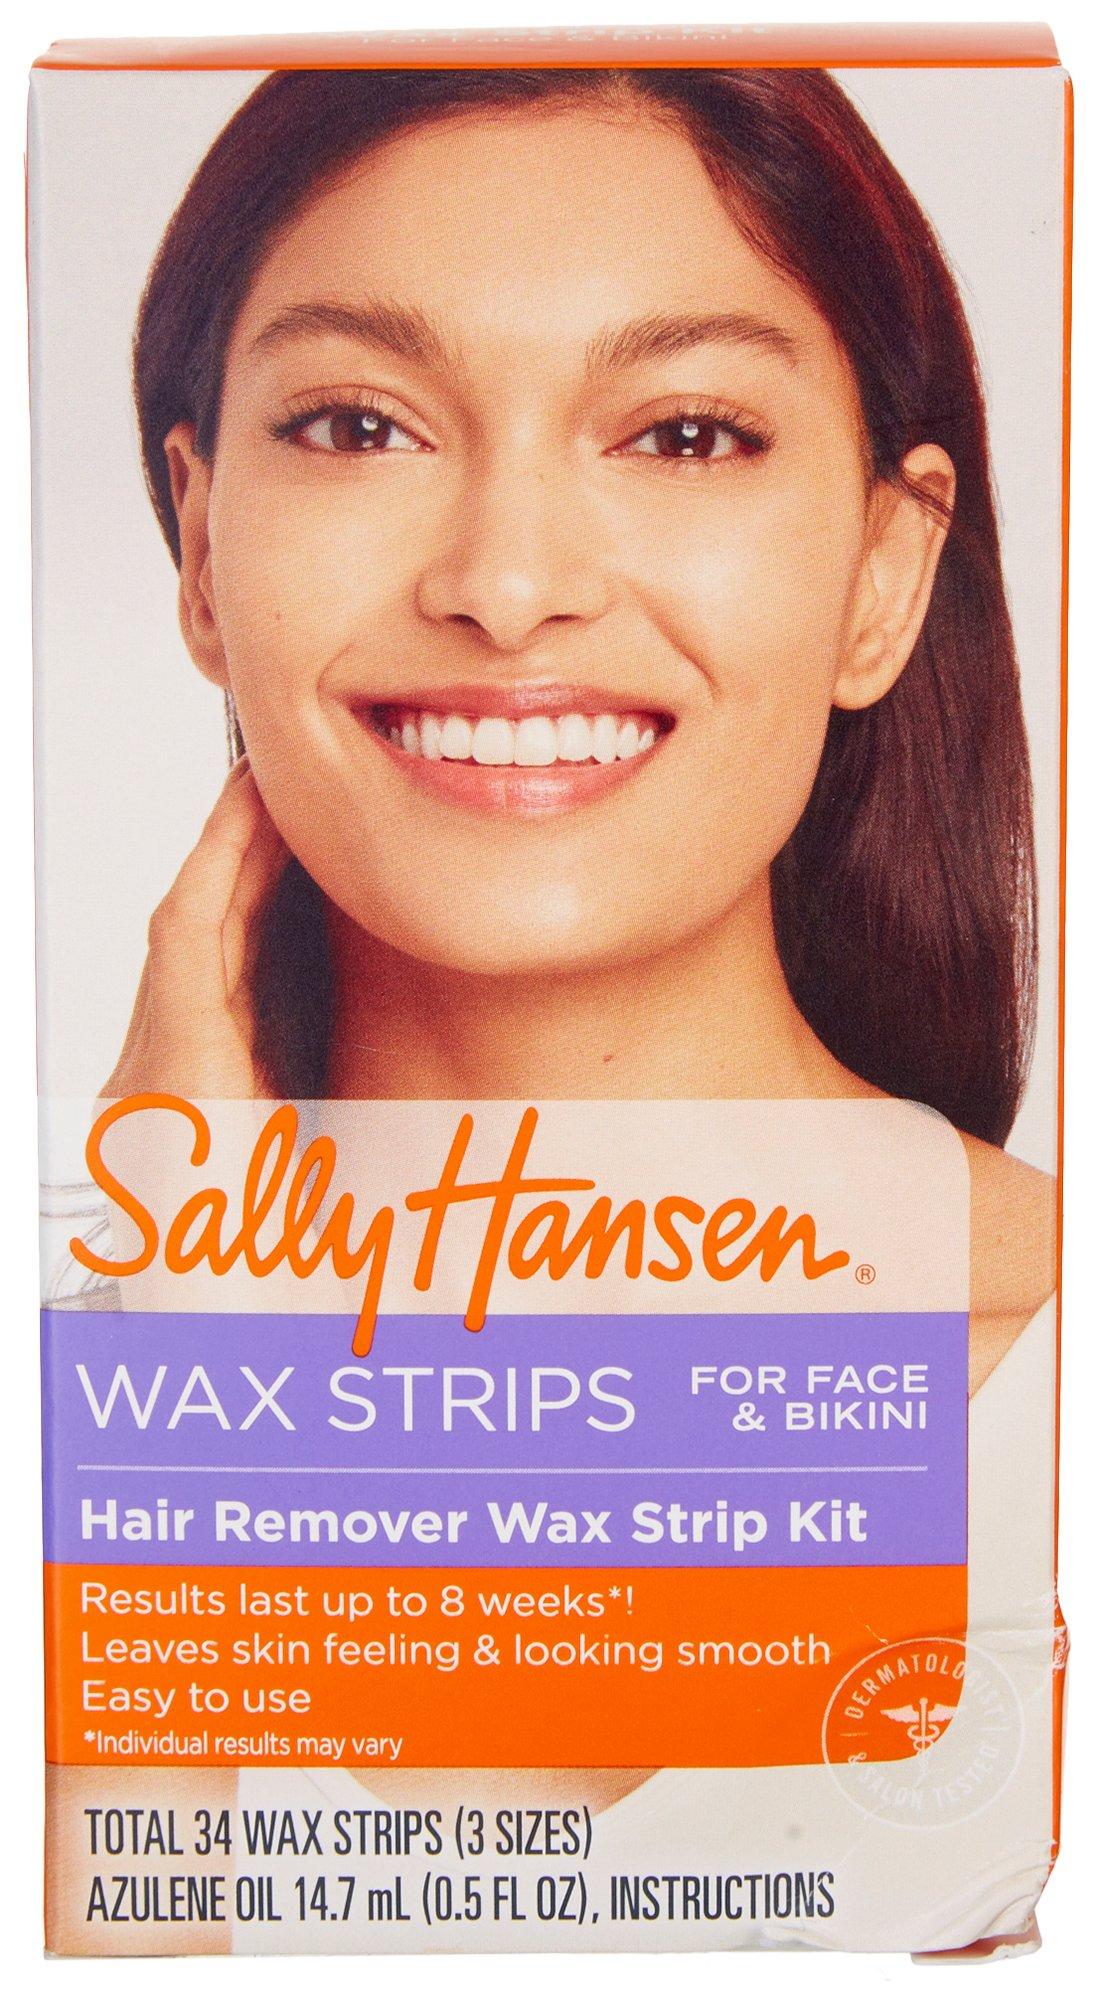 Hair Remover Wax Strip Kit For Face & Bikini